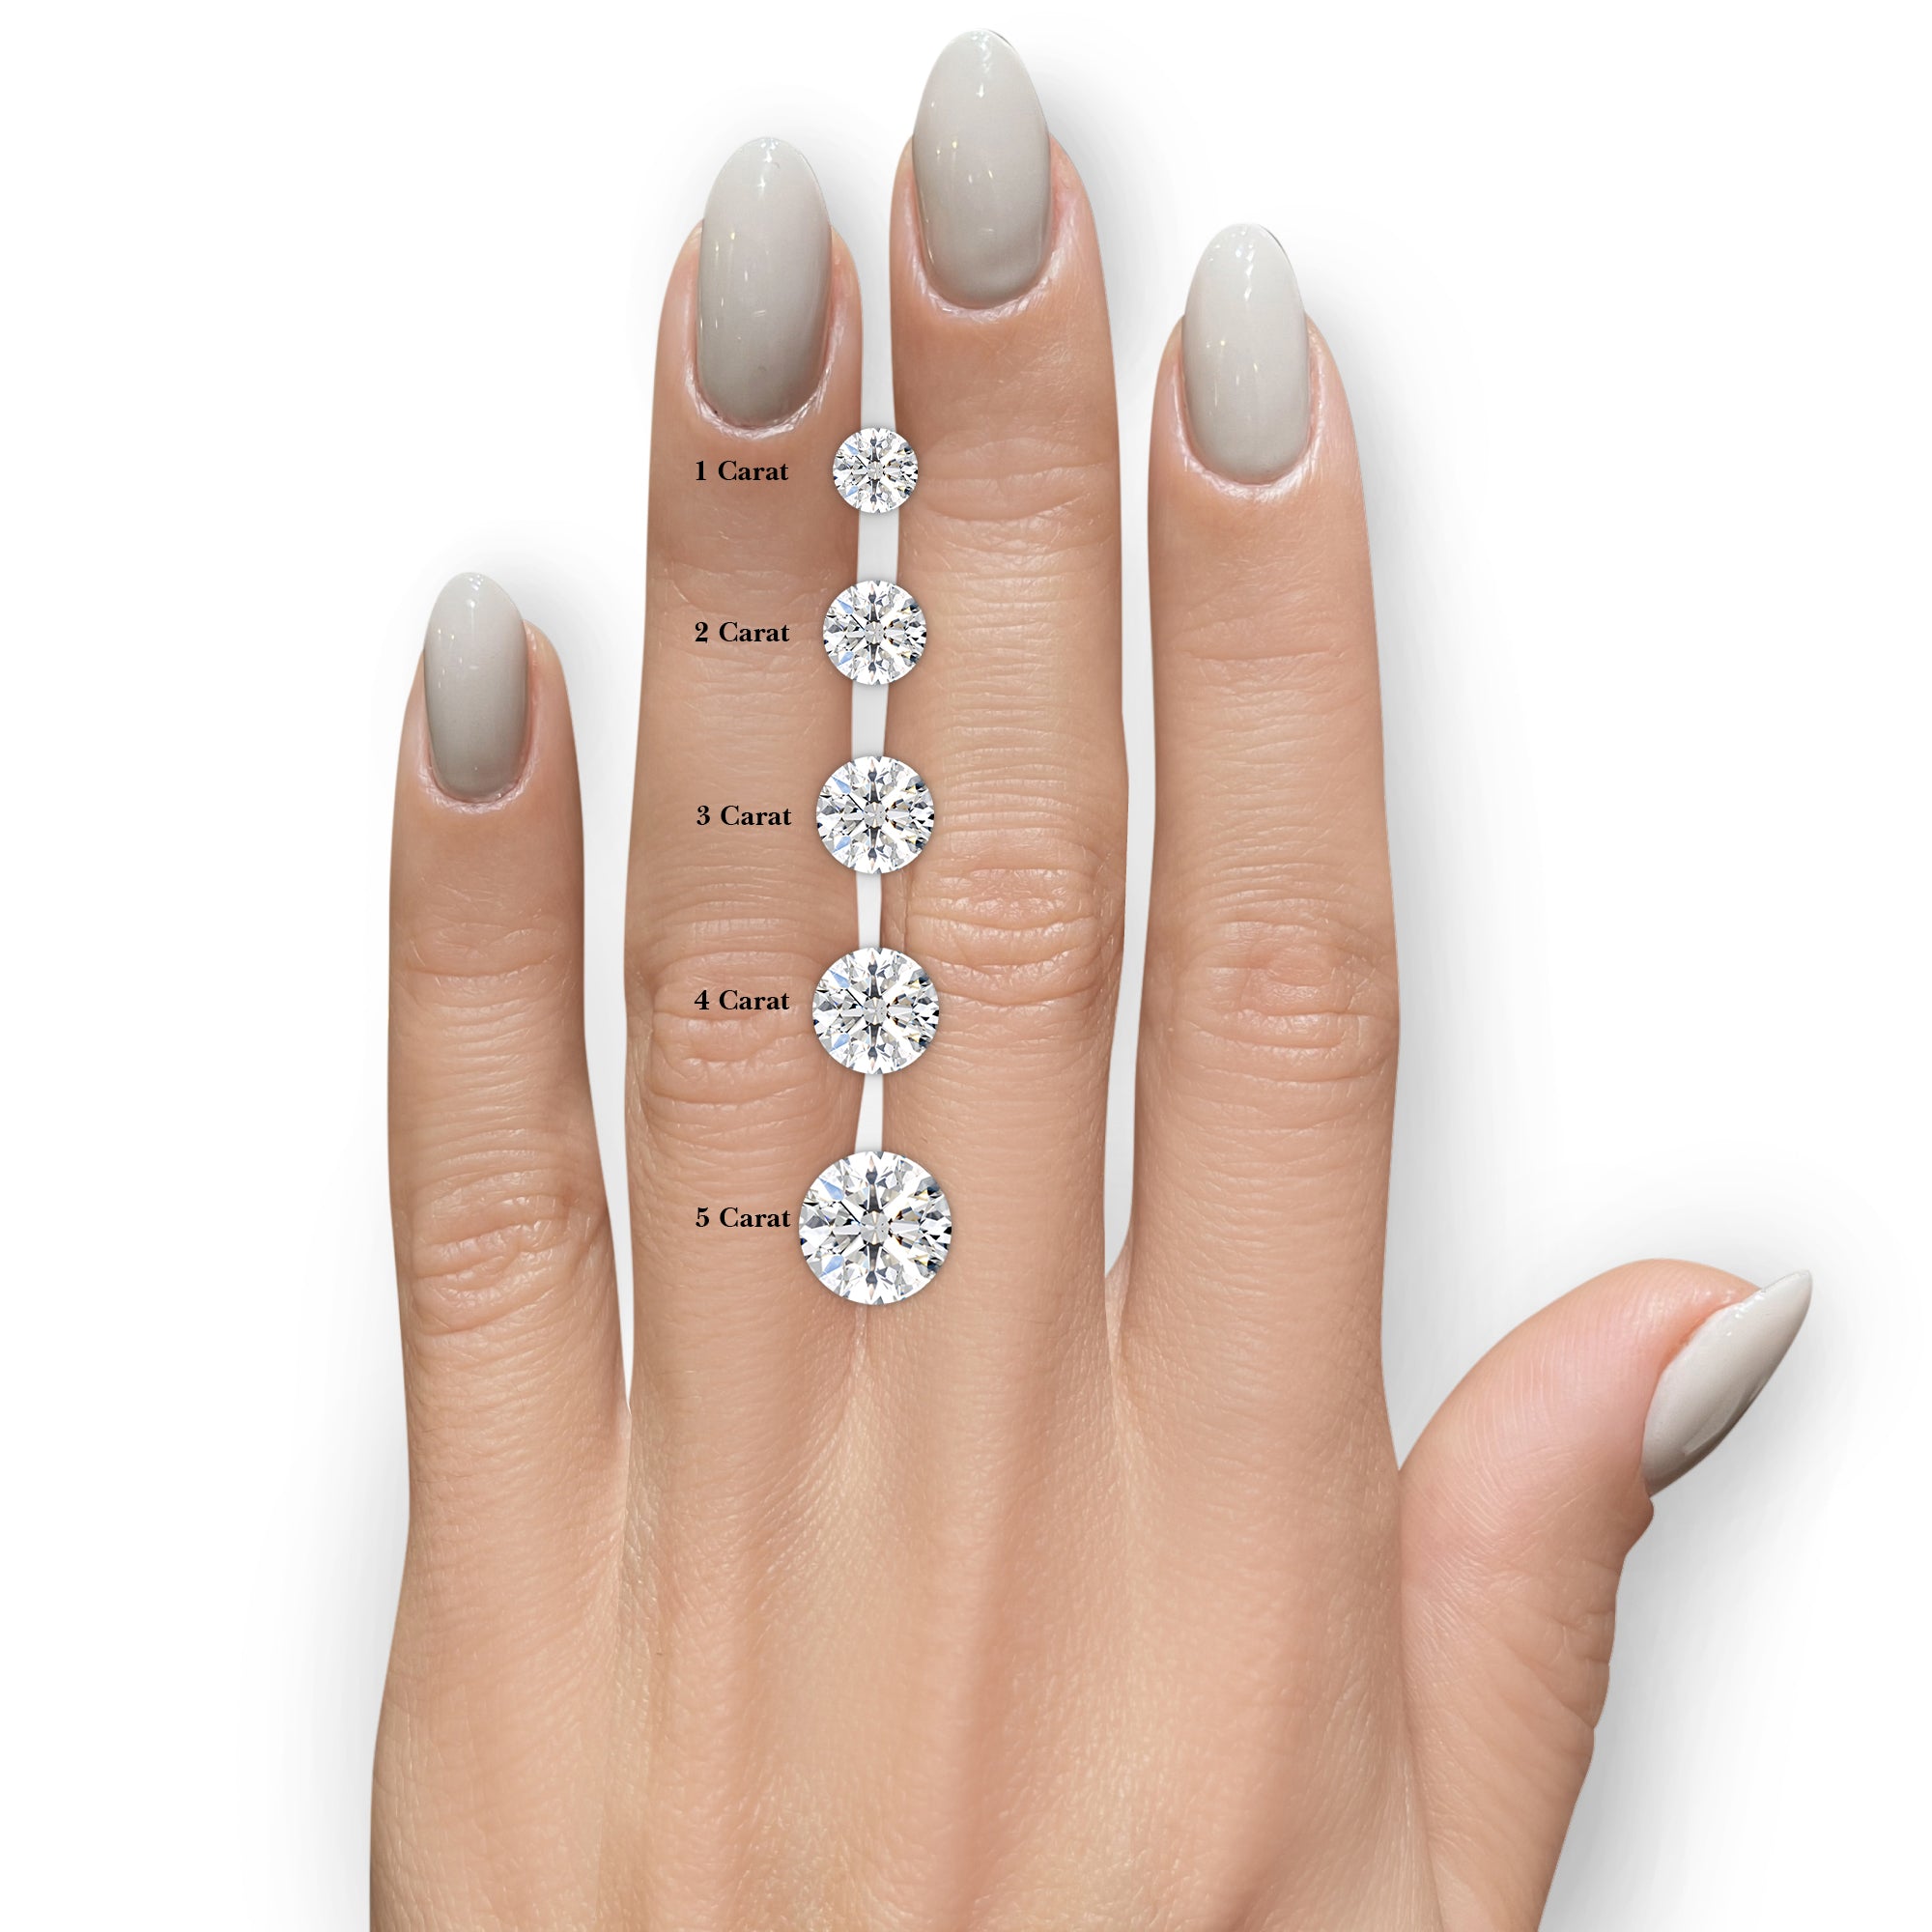 Addison Diamond Engagement Ring   (2.5 Carat) -Platinum